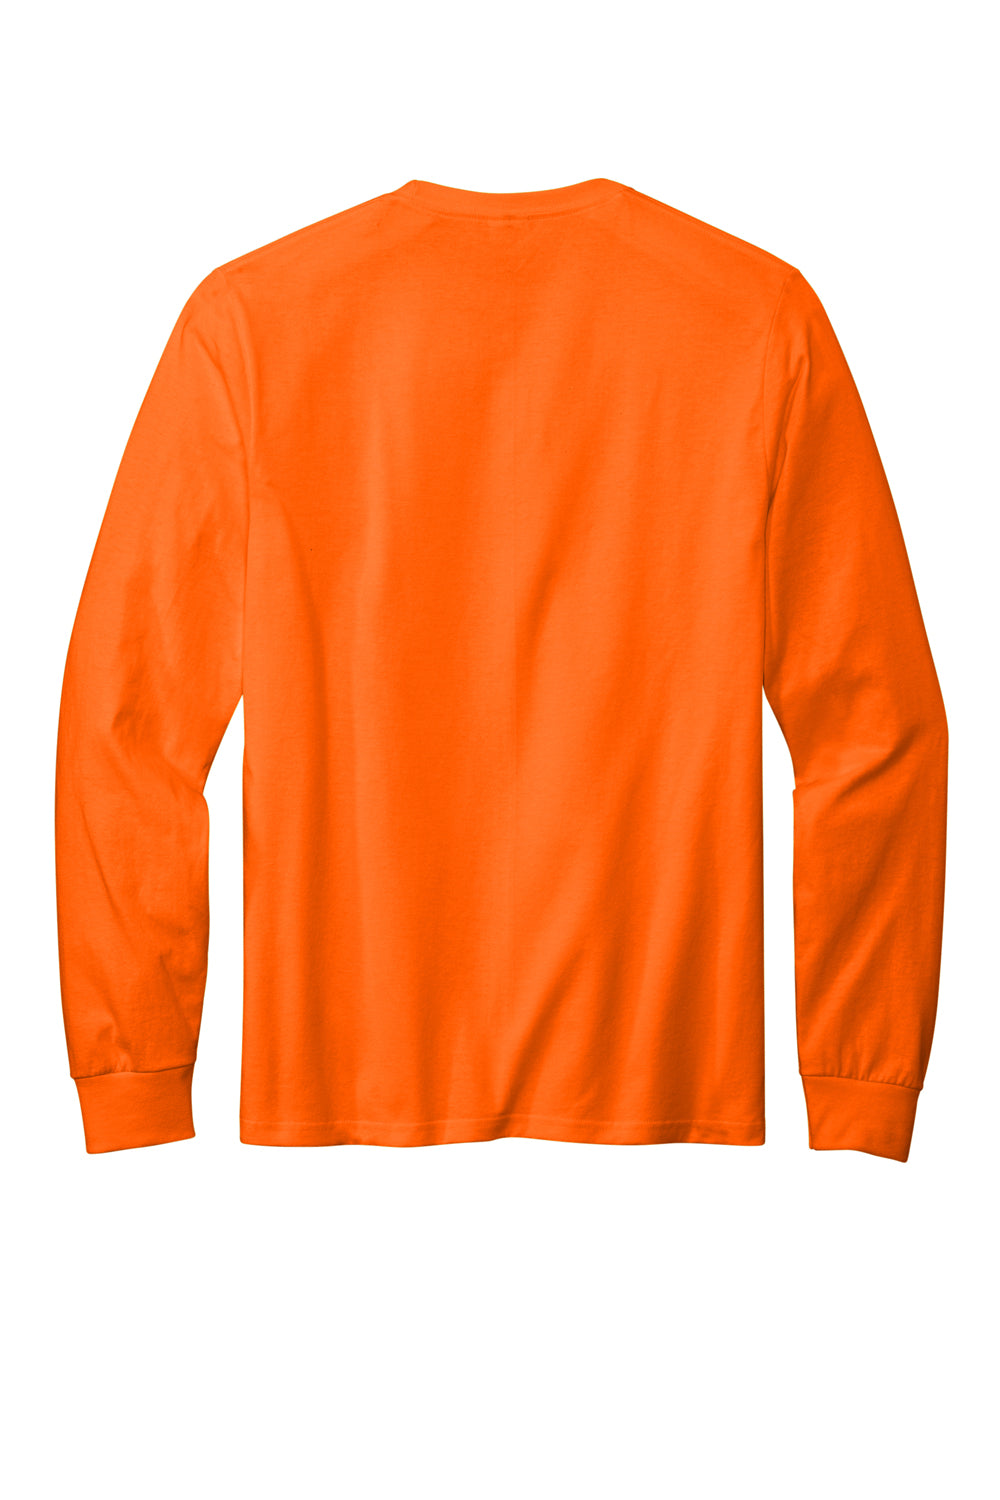 Volunteer Knitwear VL100LS USA Made All American Long Sleeve Crewneck T-Shirts Safety Orange Flat Back